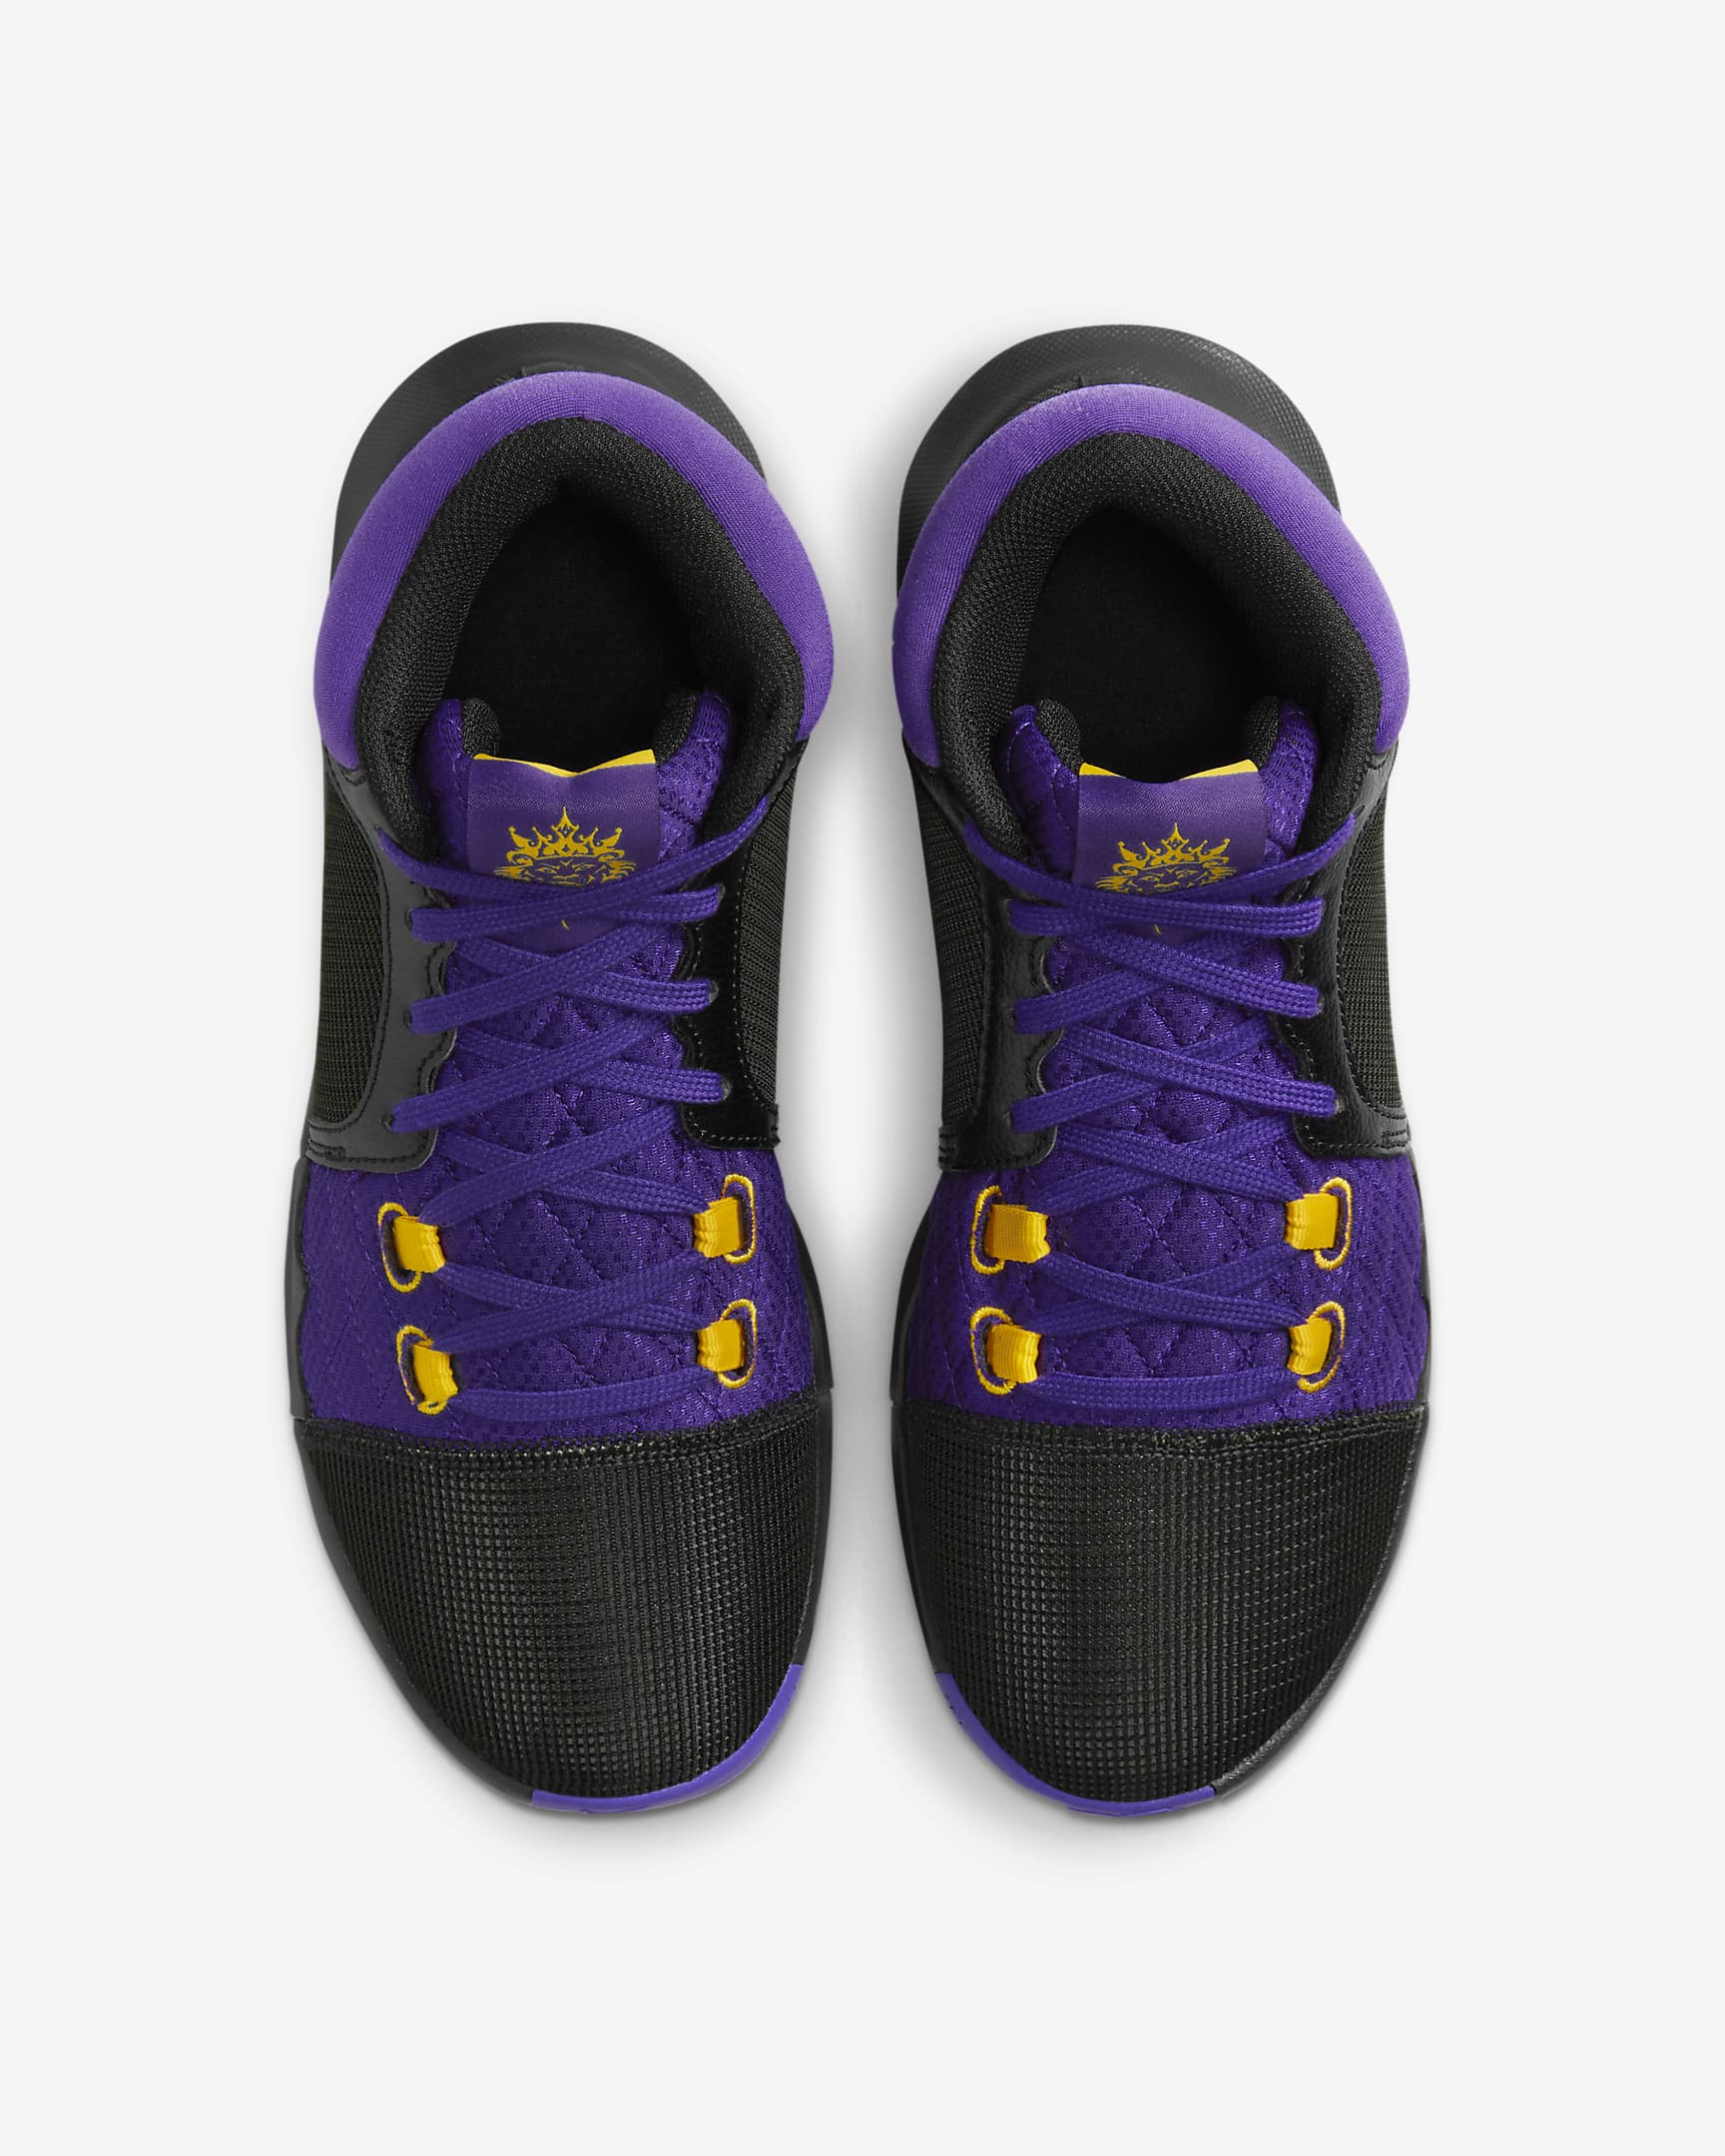 LeBron Witness 8 Basketball Shoes - Black/Field Purple/University Gold